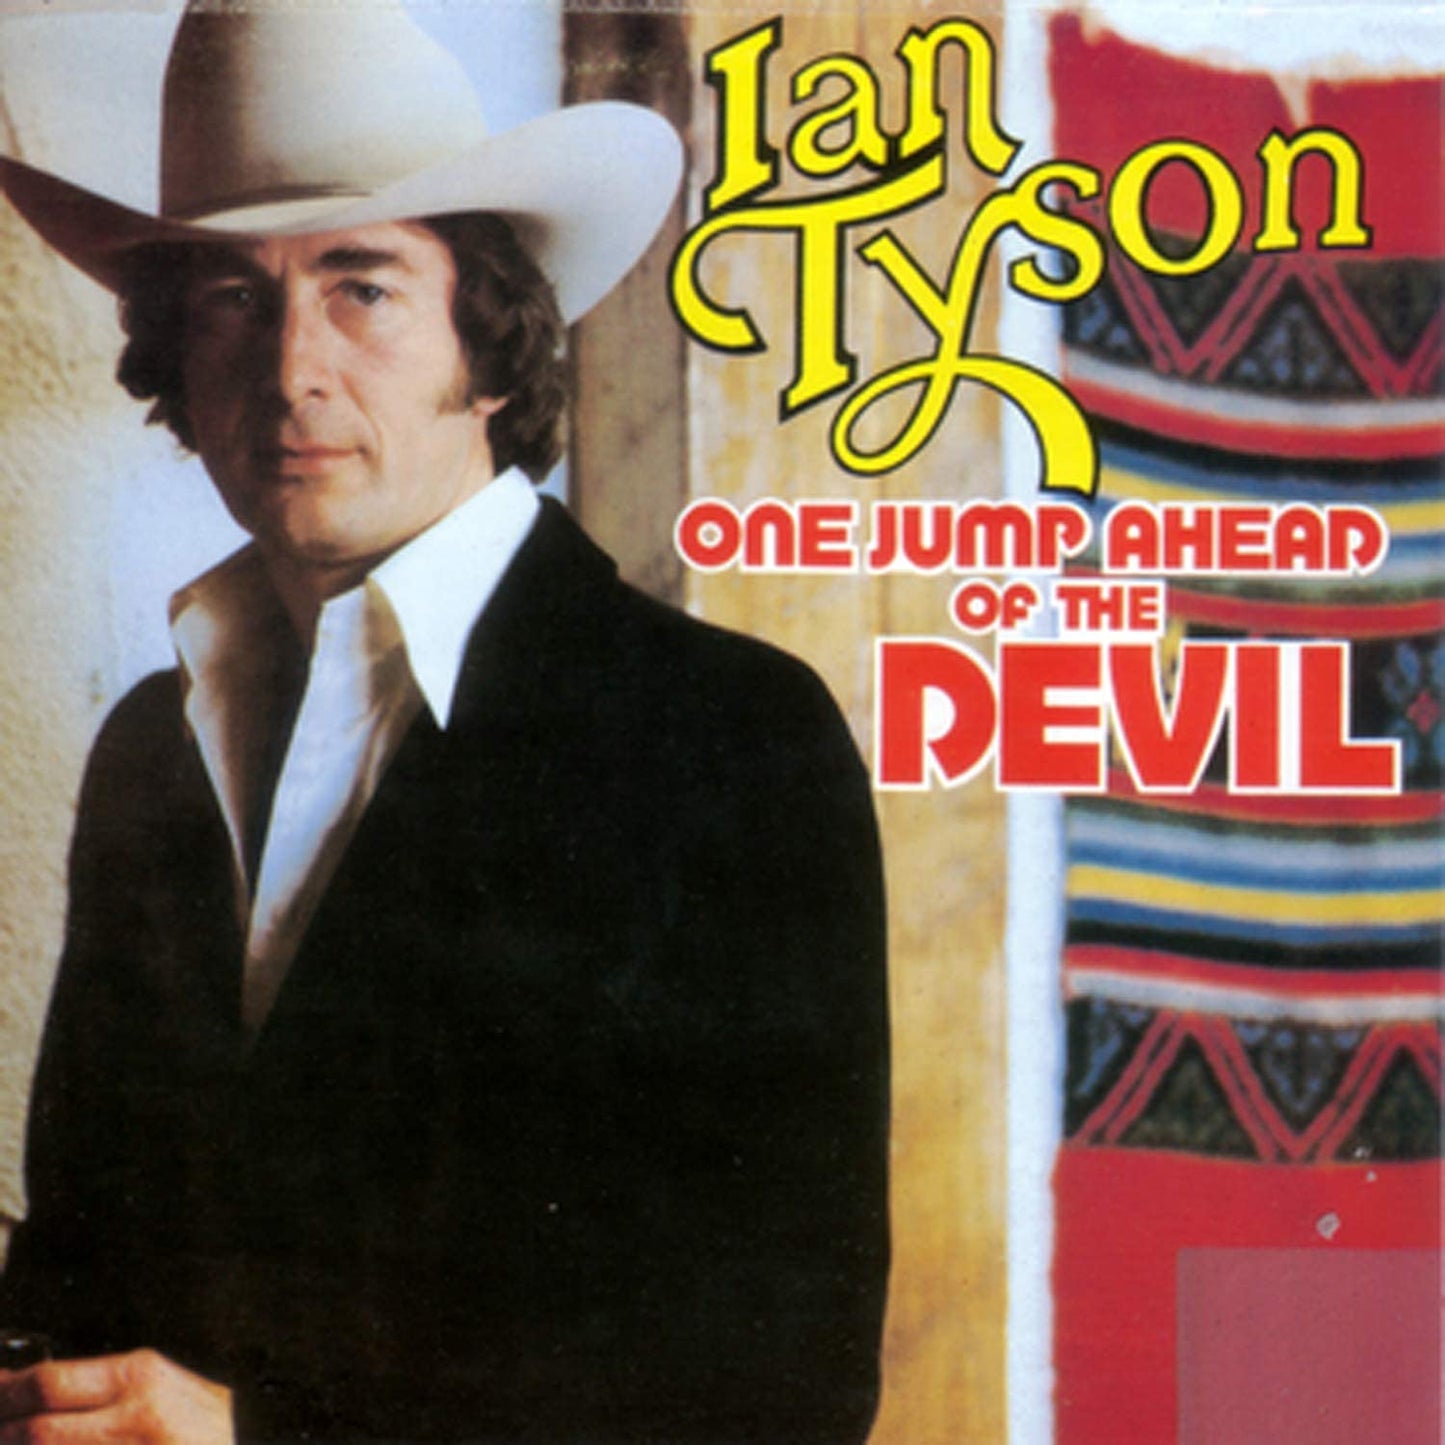 Ian Tyson - One Jump Ahead of the Devil - USED CD